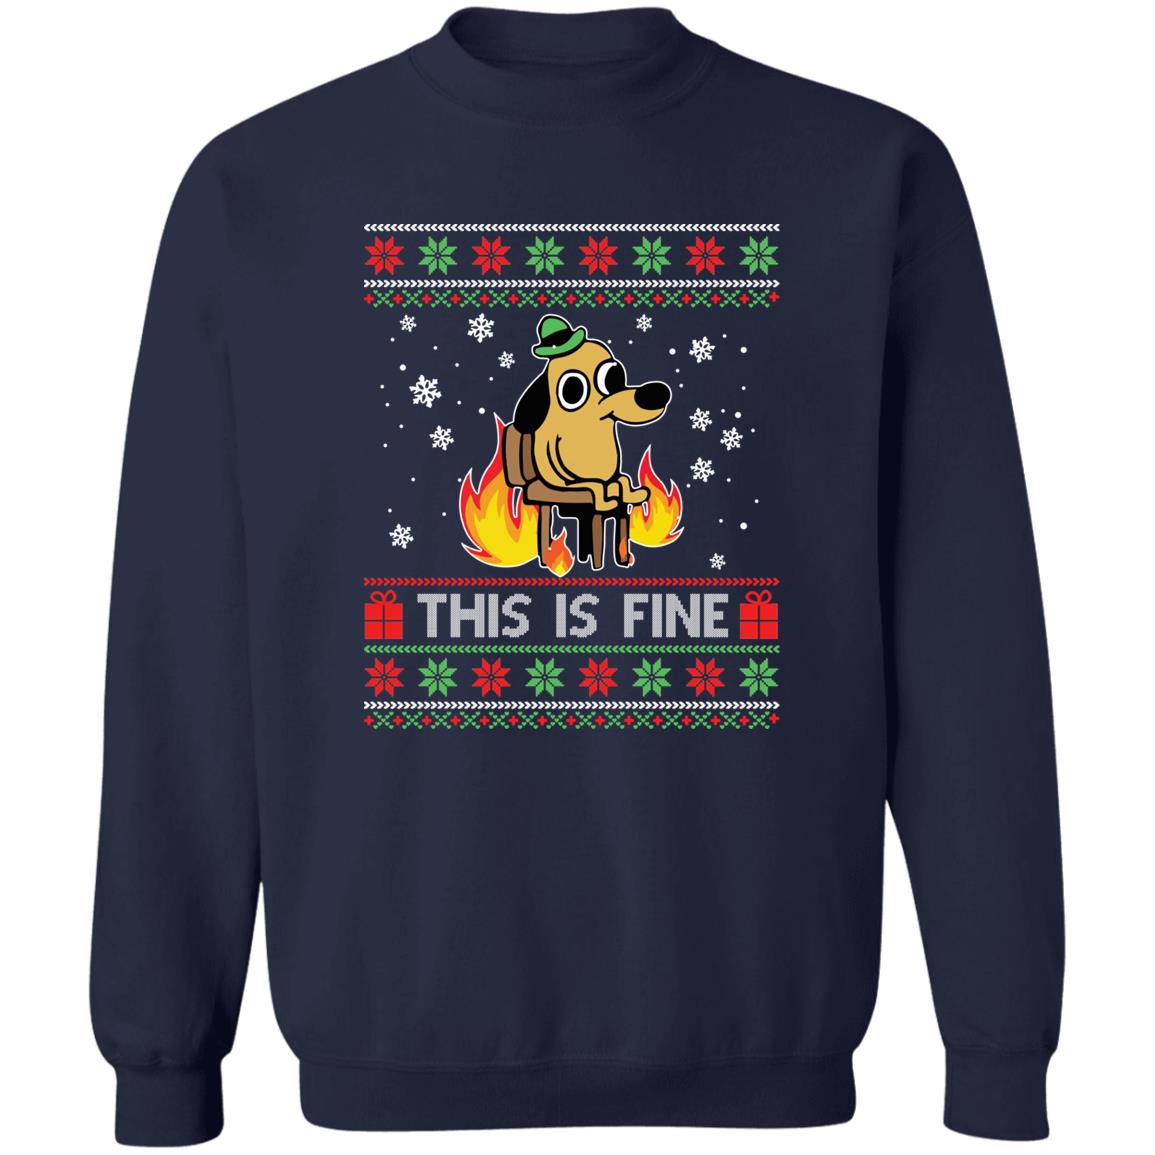 This is fine dog meme Christmas sweatshirt 